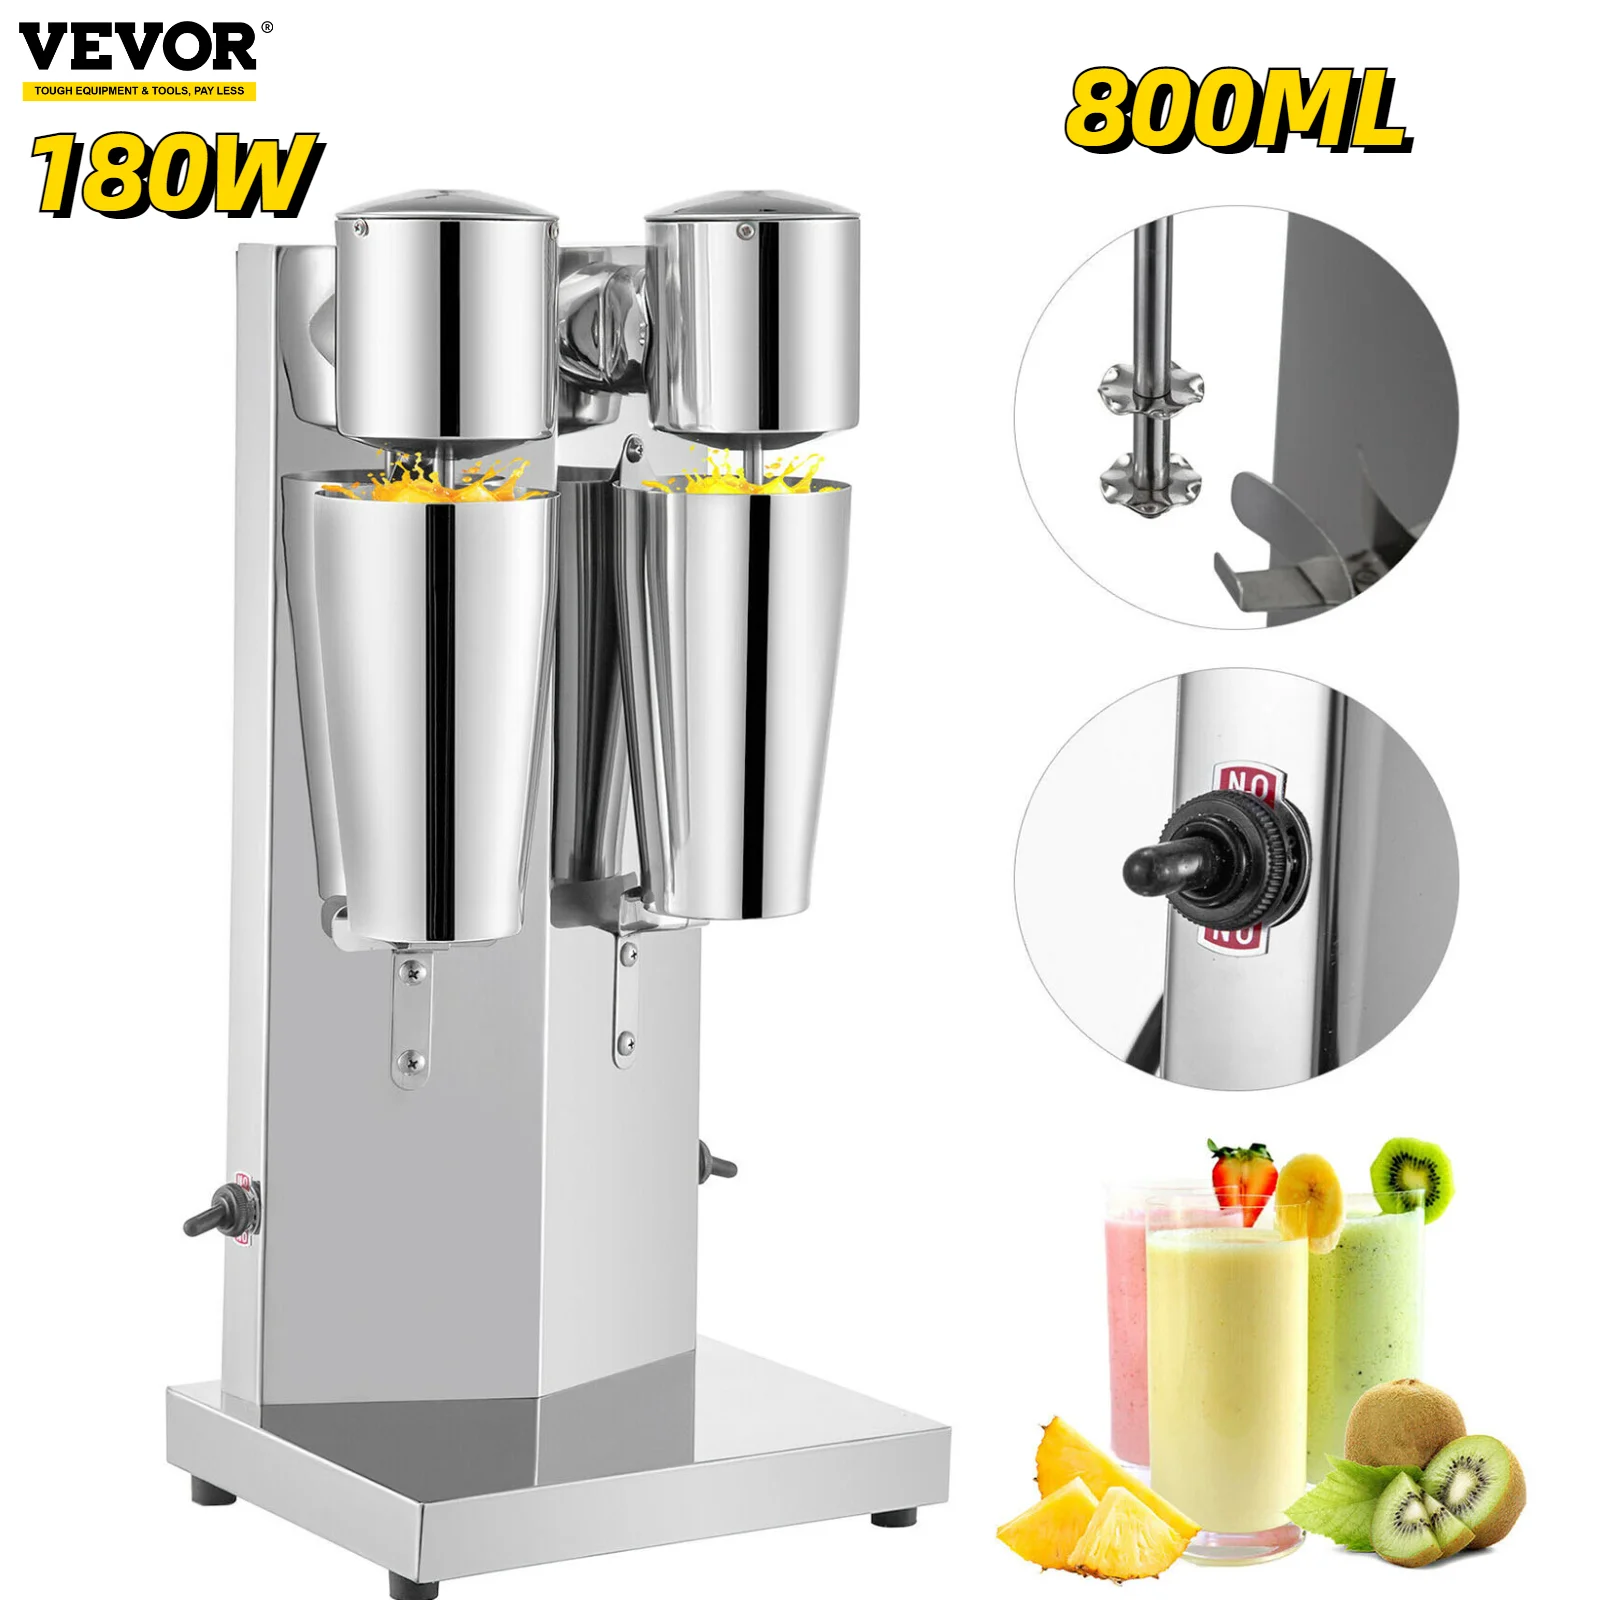 

VEVOR Commercial Milkshake Machine 800ml Home Smoothie Drink Mixer 180W Electric Single Head Milk Bubble Tea Shake Blender Maker